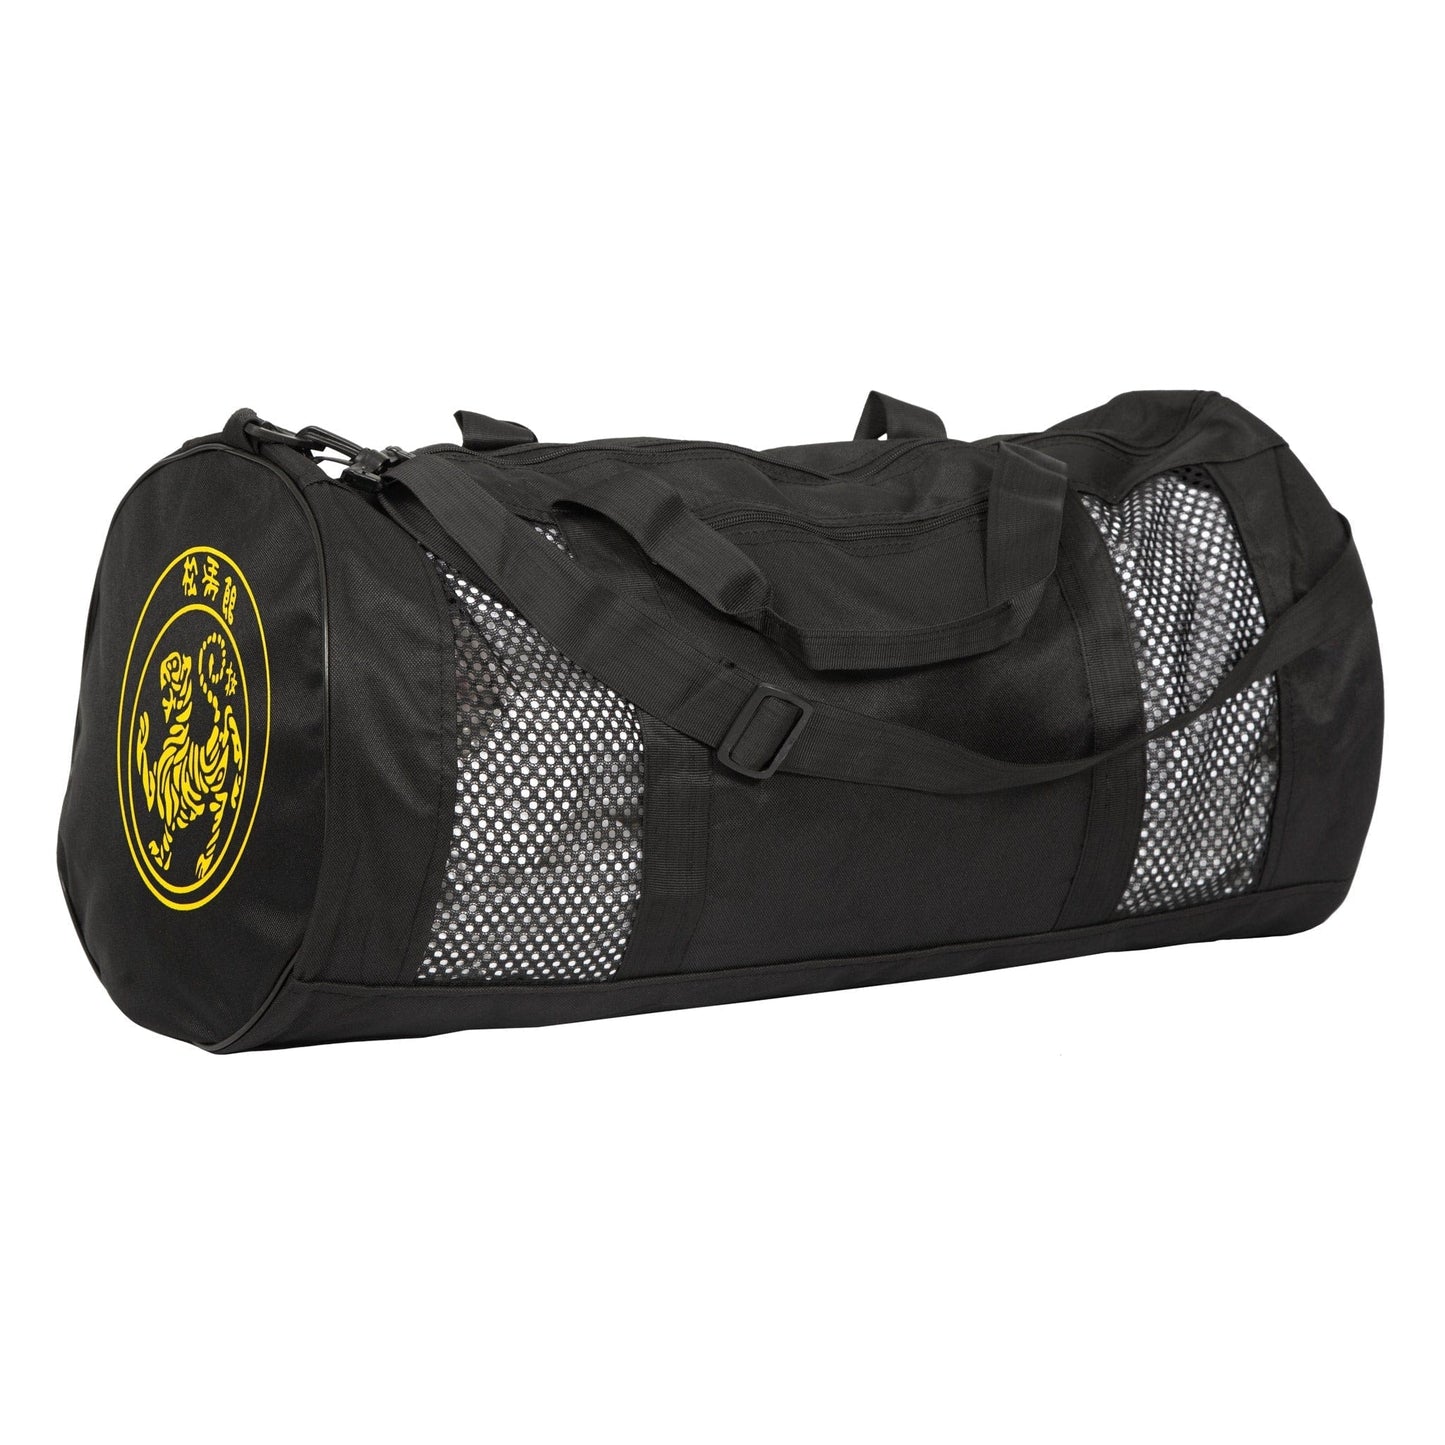 ProForce sporting goods Shotokan ProForce Ultra Mesh Bag Martial arts gear bag